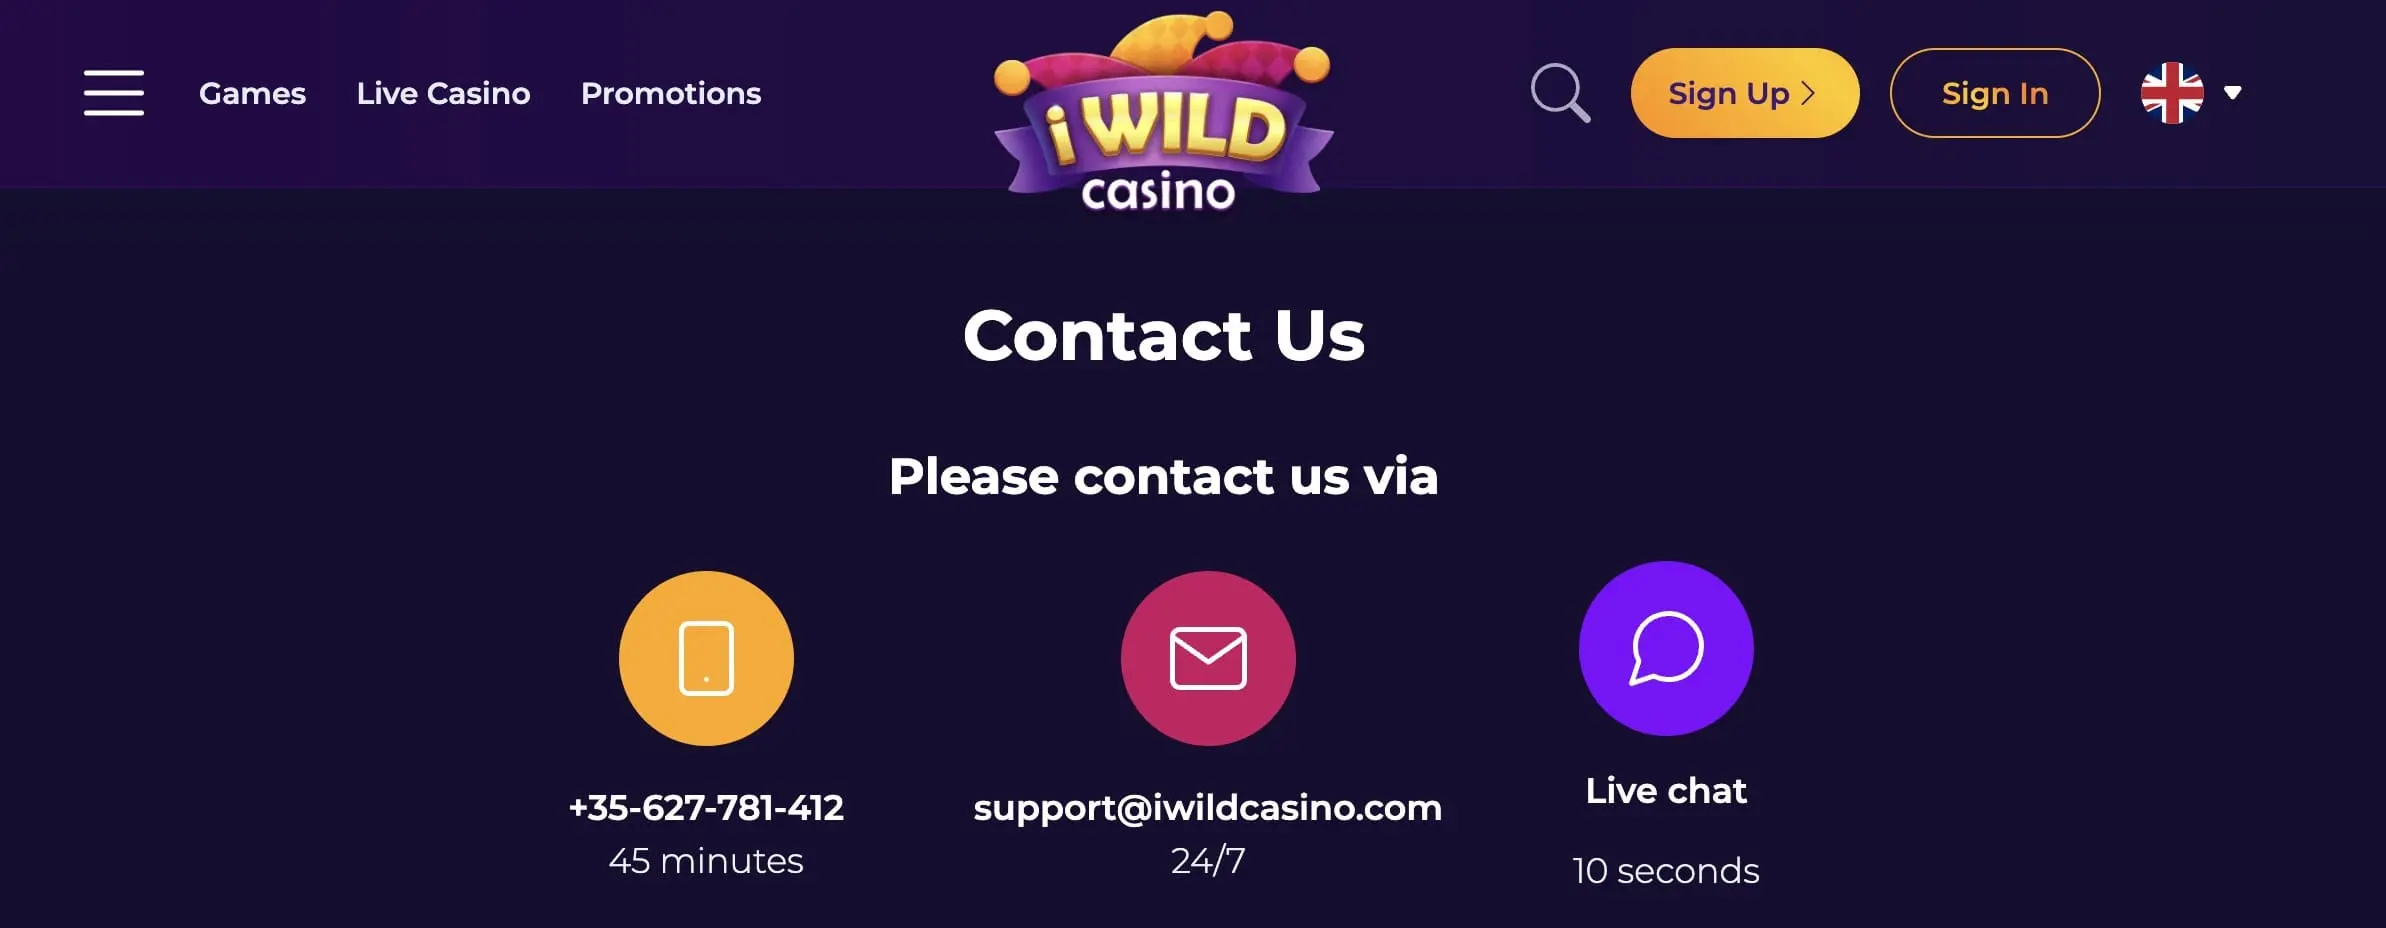 iWild casino customer support